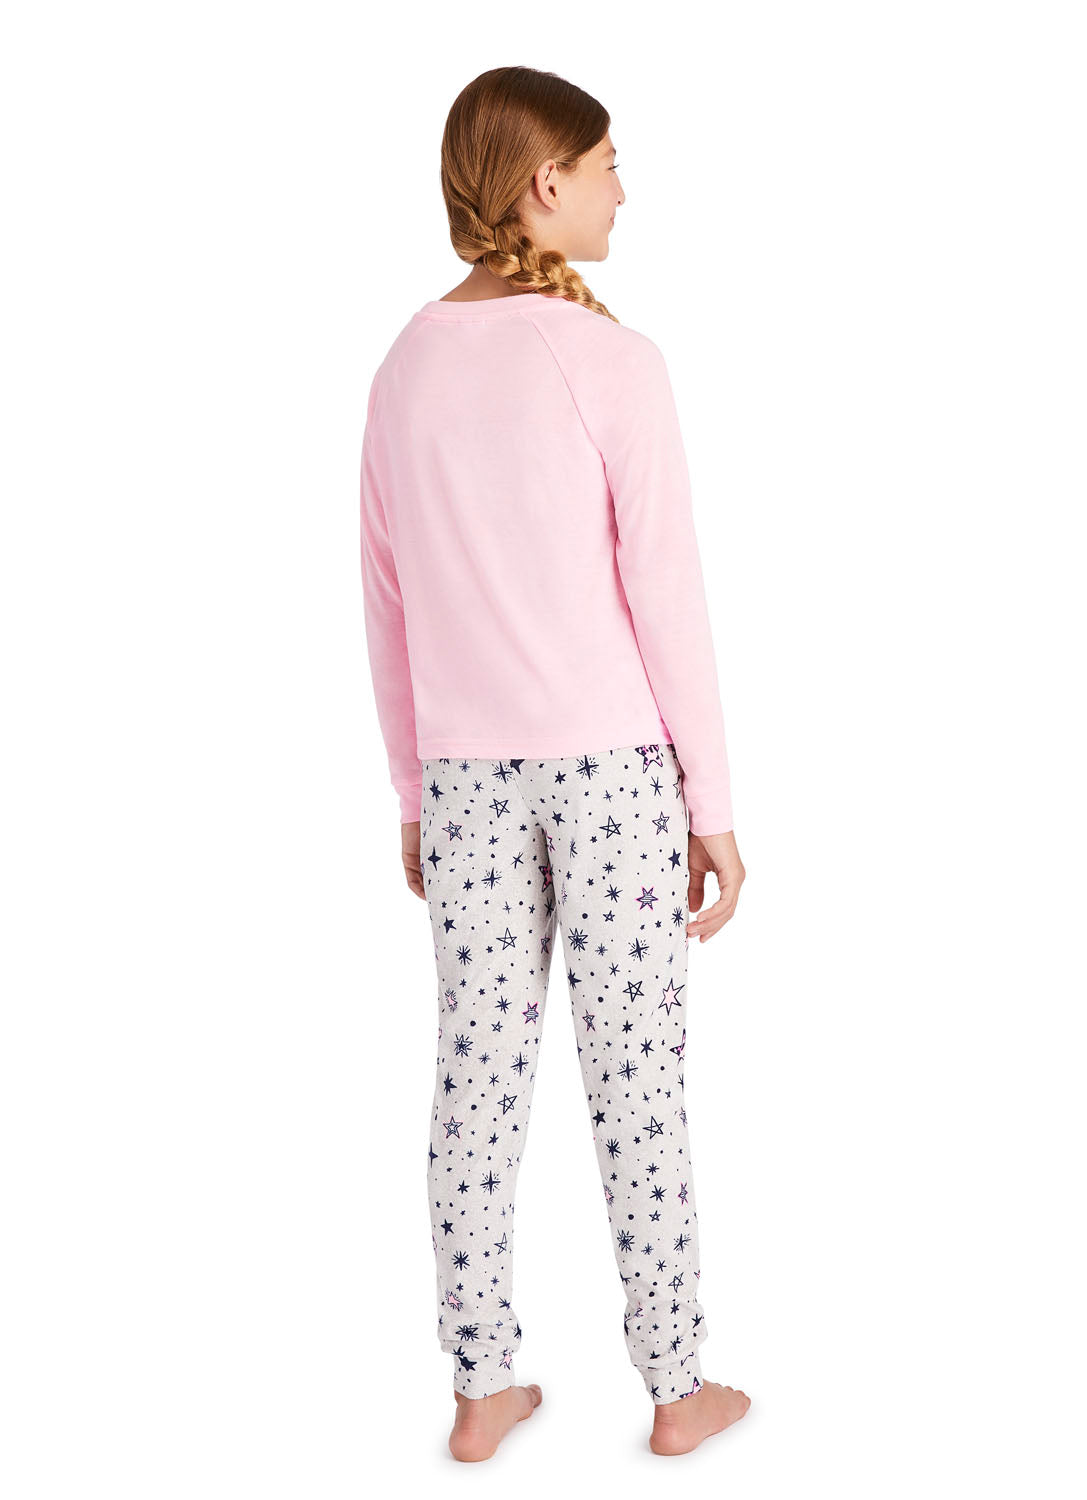 Back view Teen wearing a Pajama Set (Koala pink print)